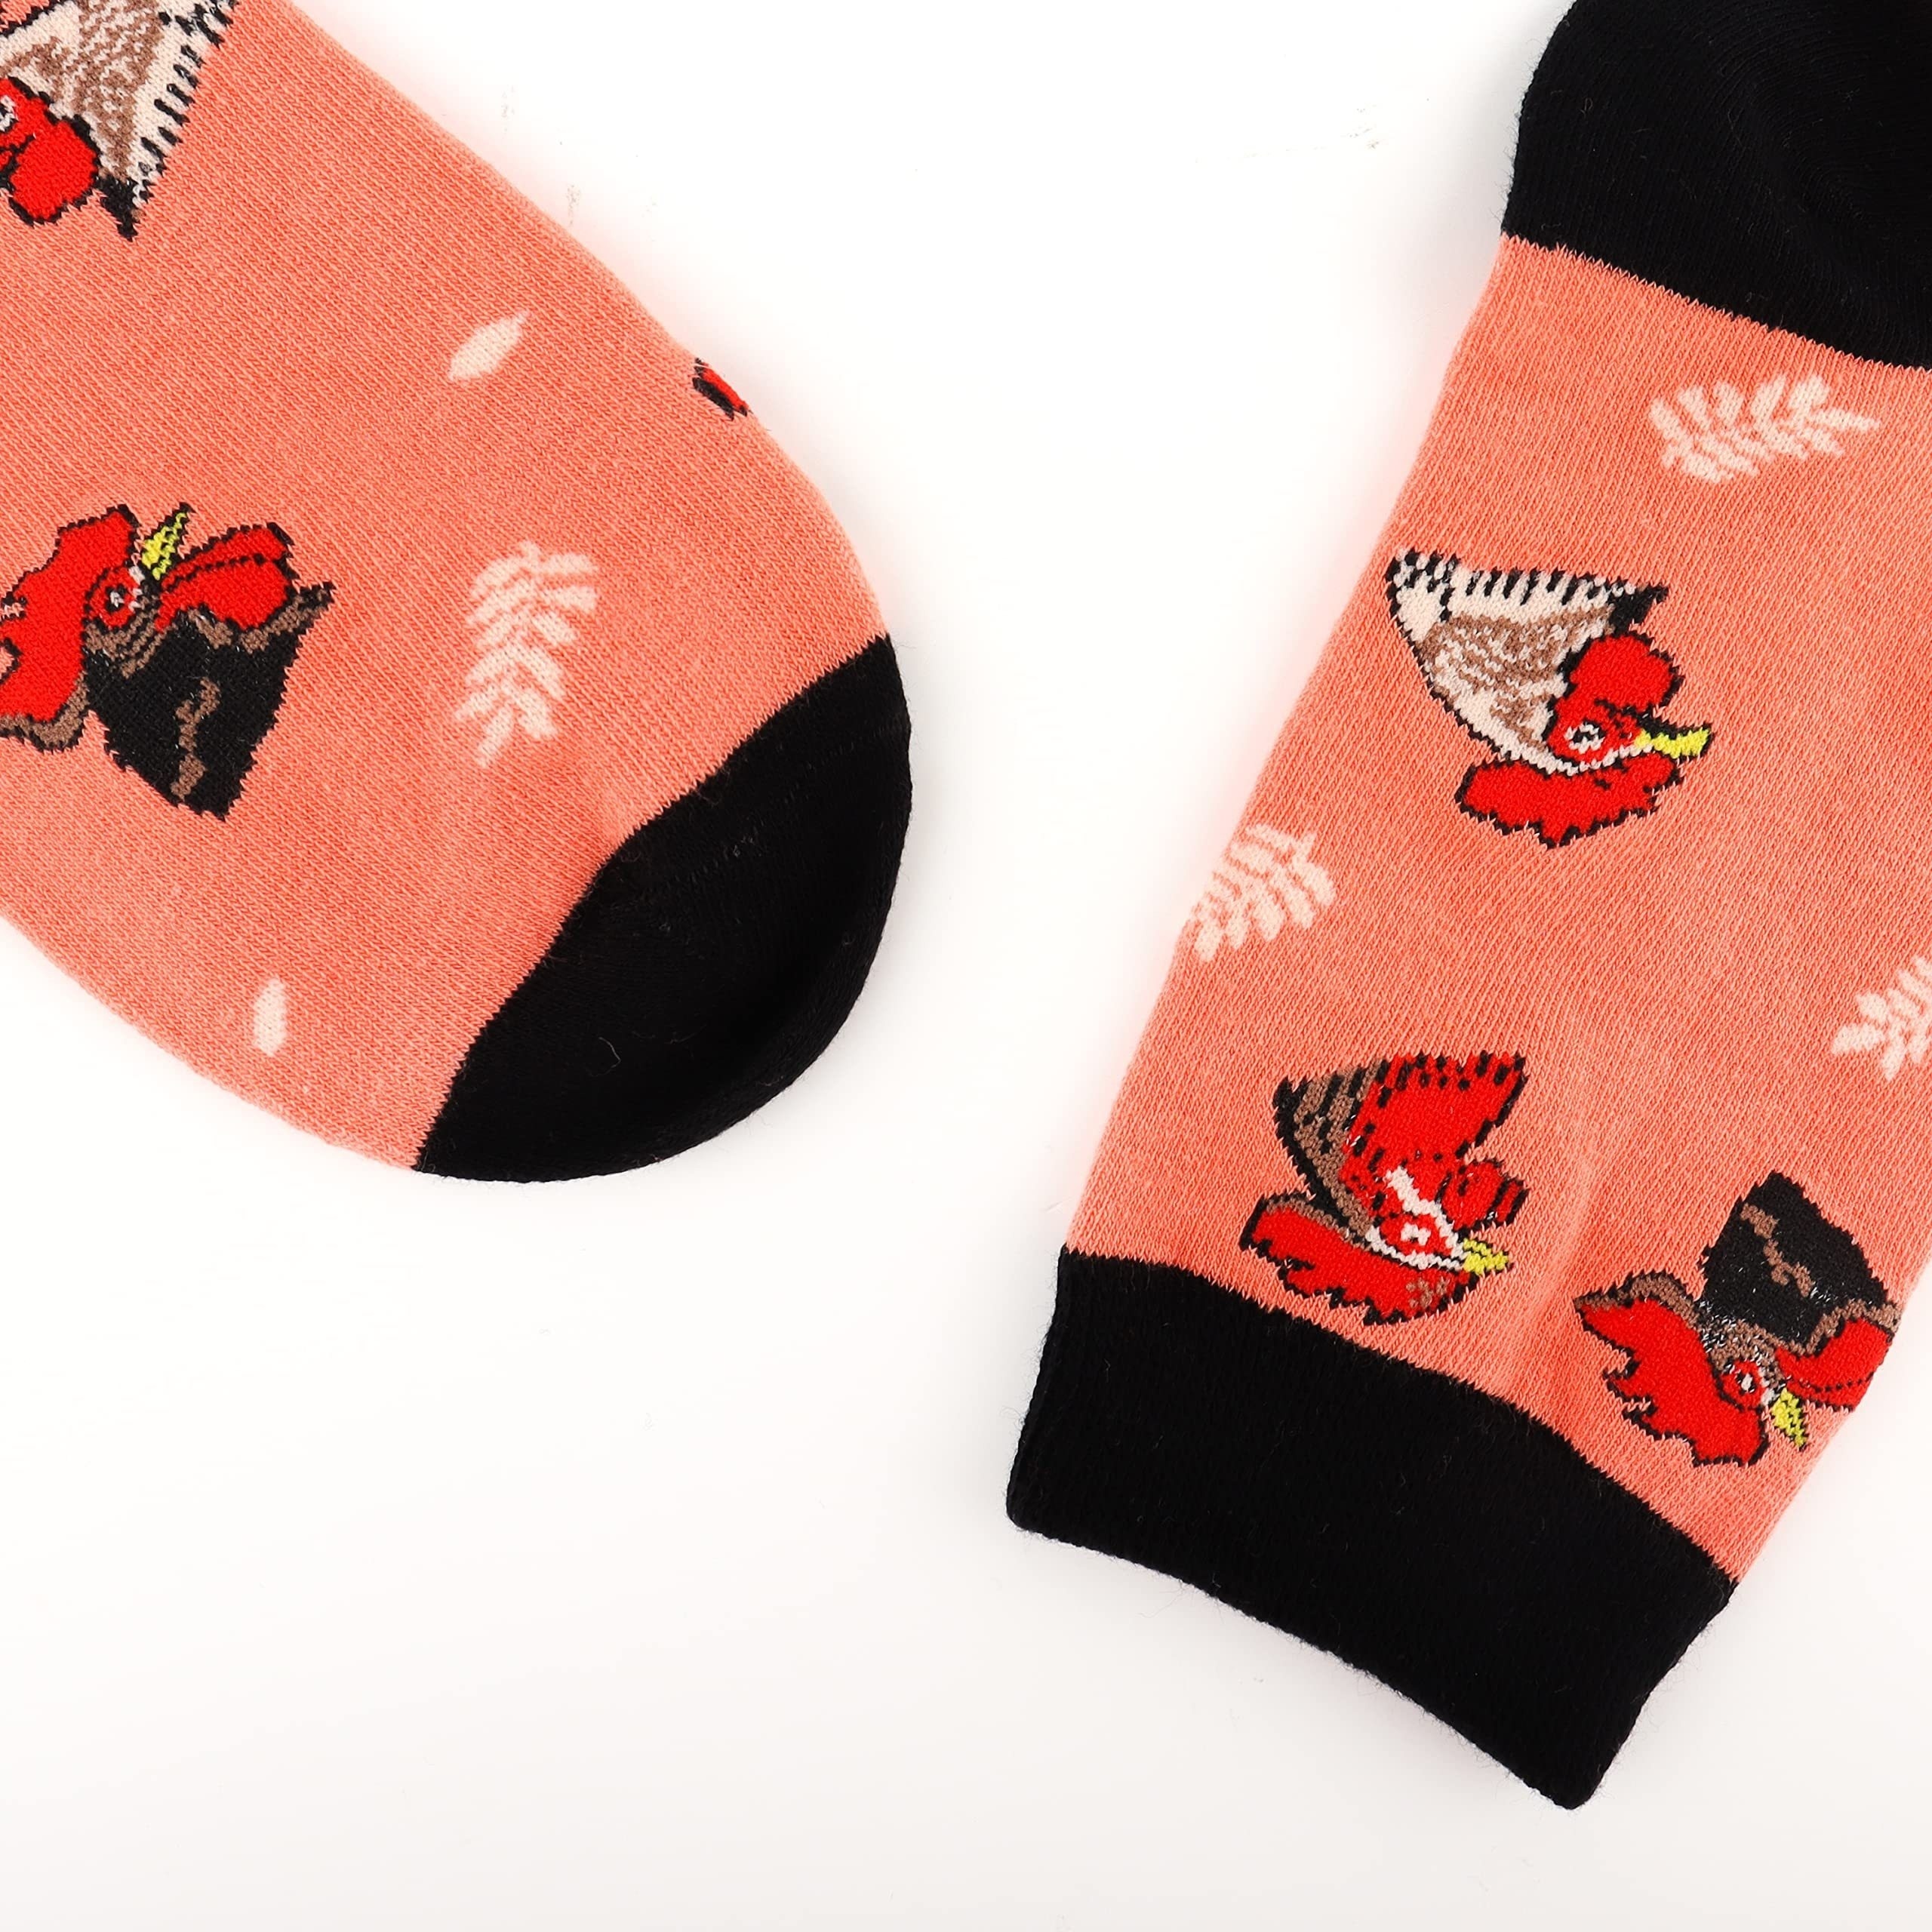 5pairs Paw Print Ankle Socks Silly Socks for Women Funky Socks Funny Socks